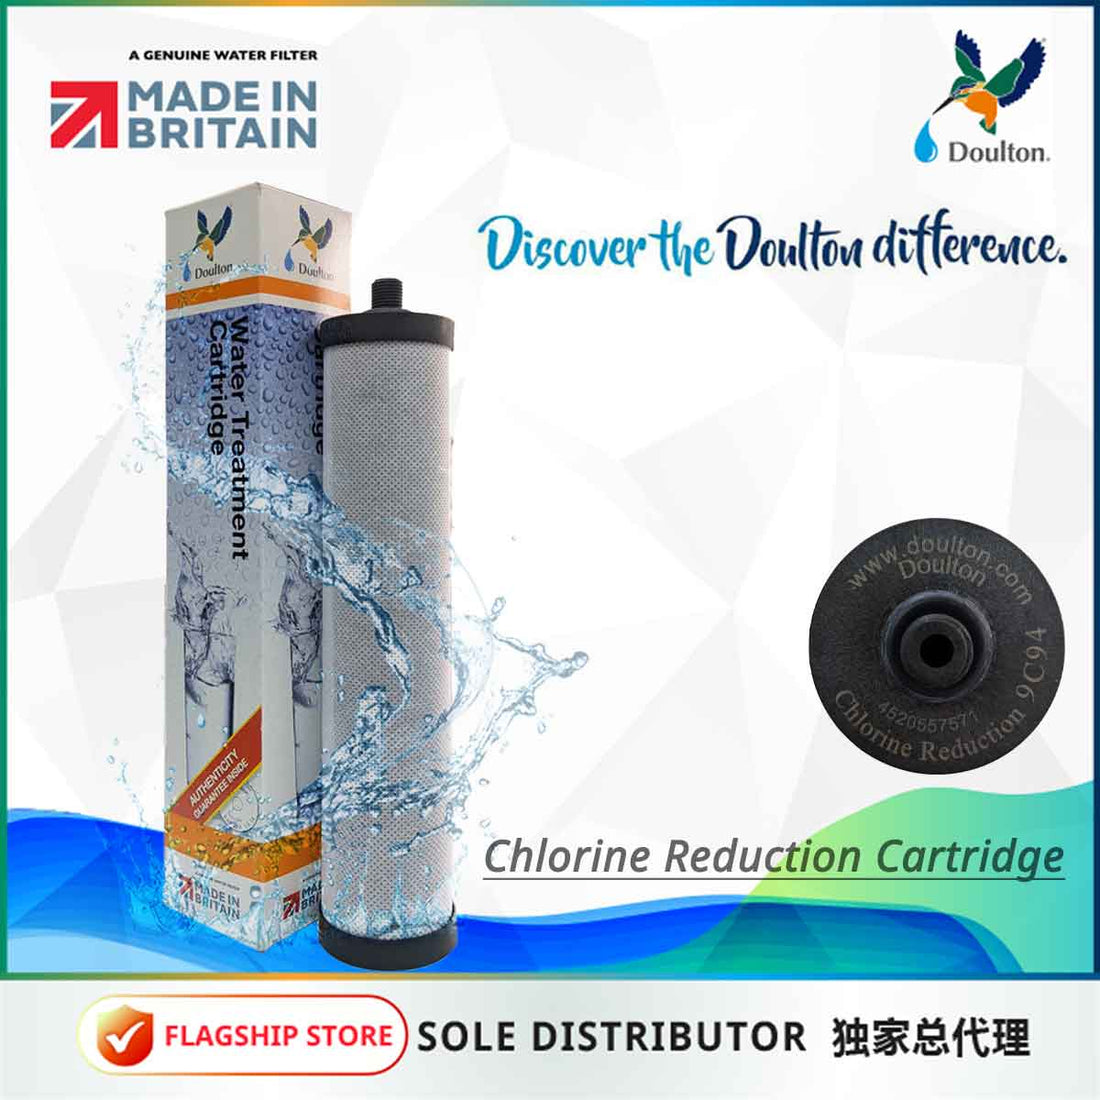 Doulton Carbon Block 9C94 Chlorine Reduction - Doulton Water Purifier, Sole Distributor (MY) - Britain Premium Brand Since 1826